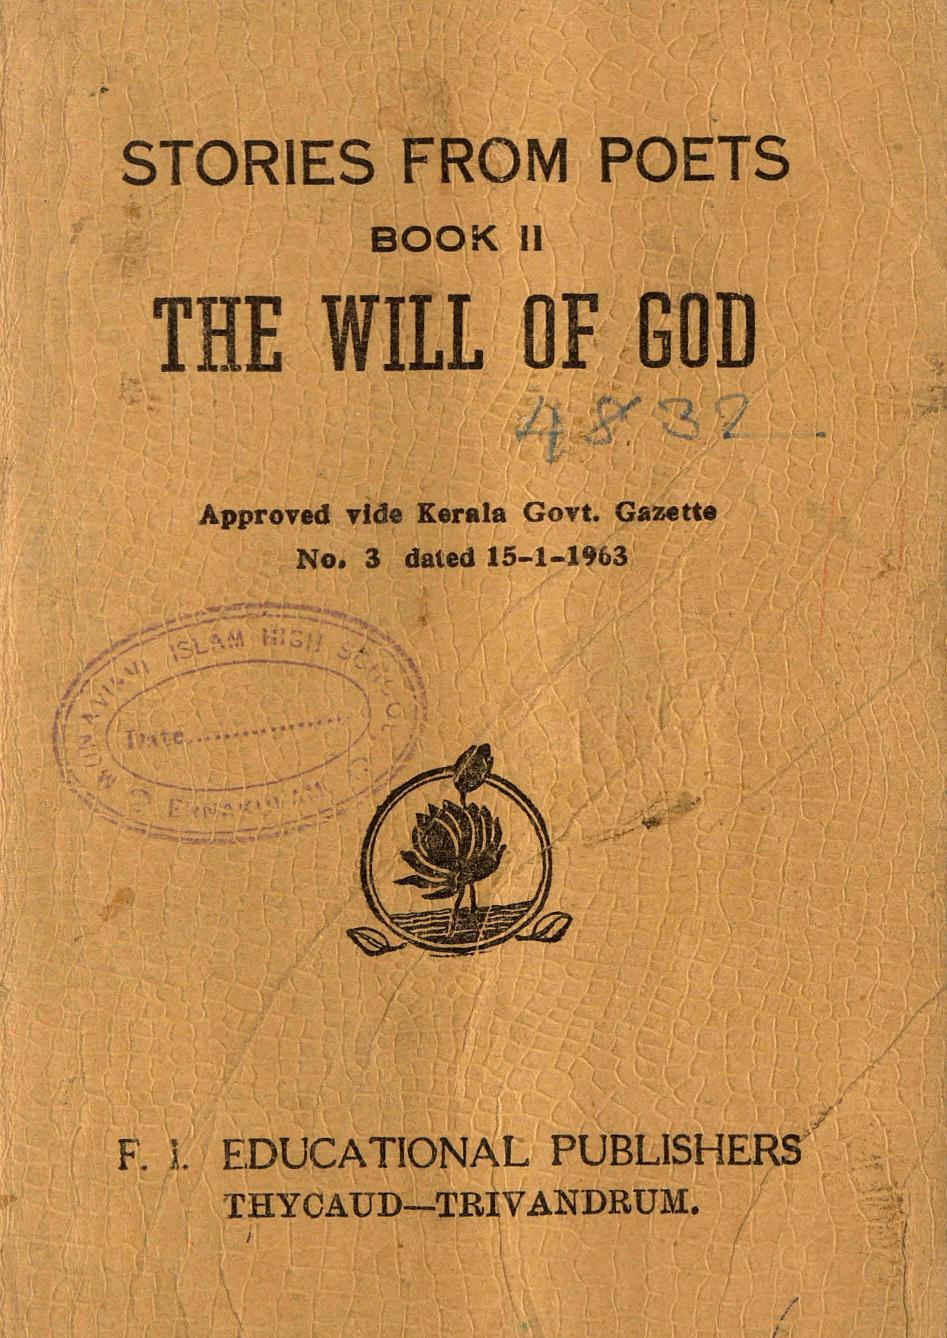  1963 - The Will of God - Vaidyanatha Iyer